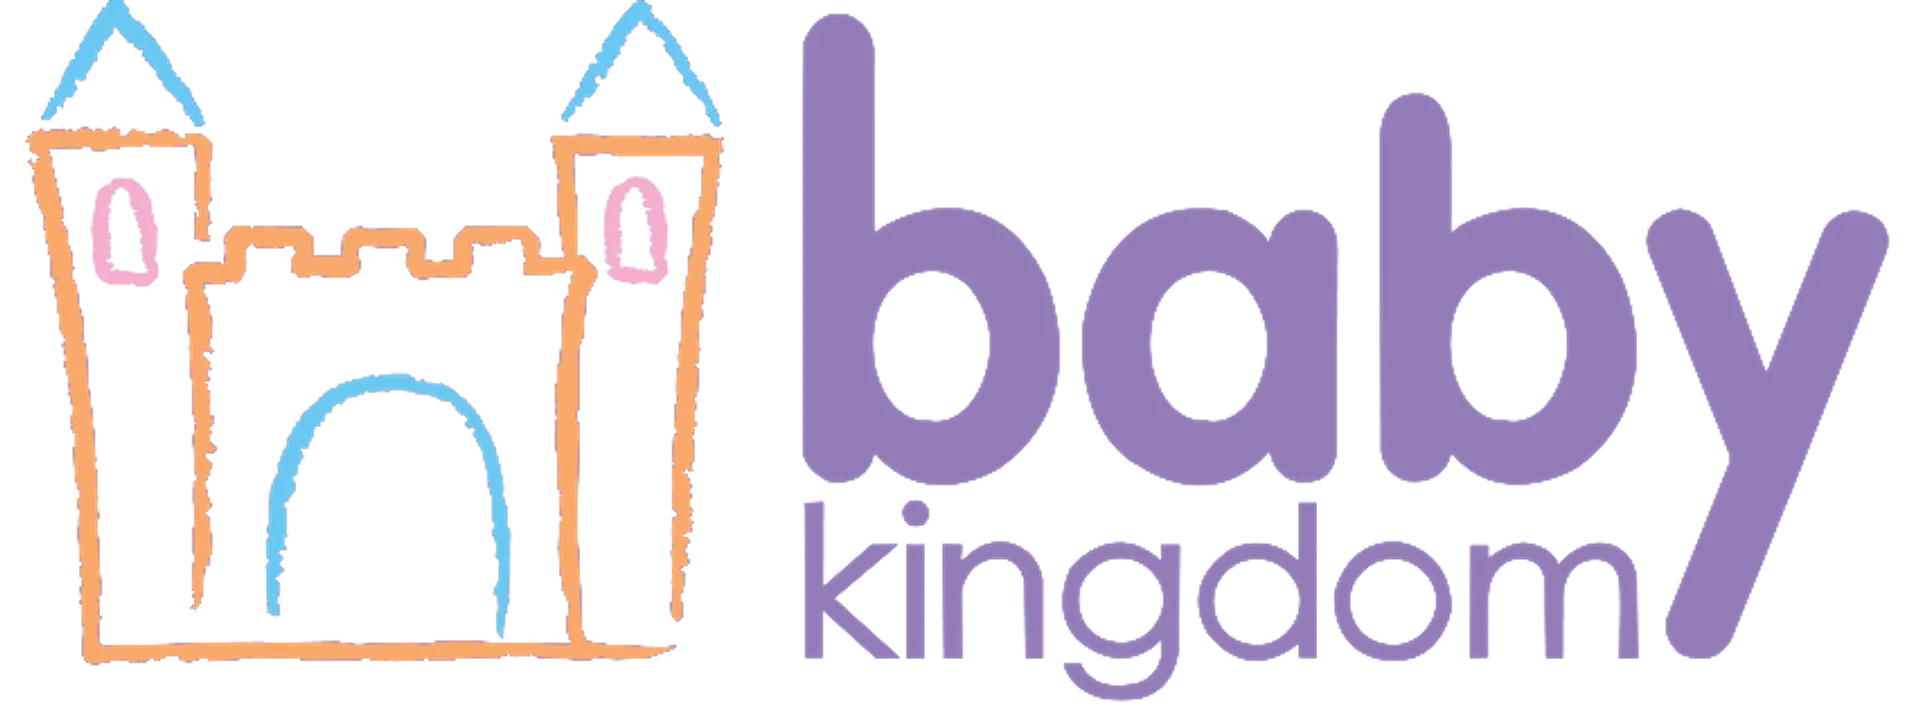 BABY KINGDOM logo of current flyer